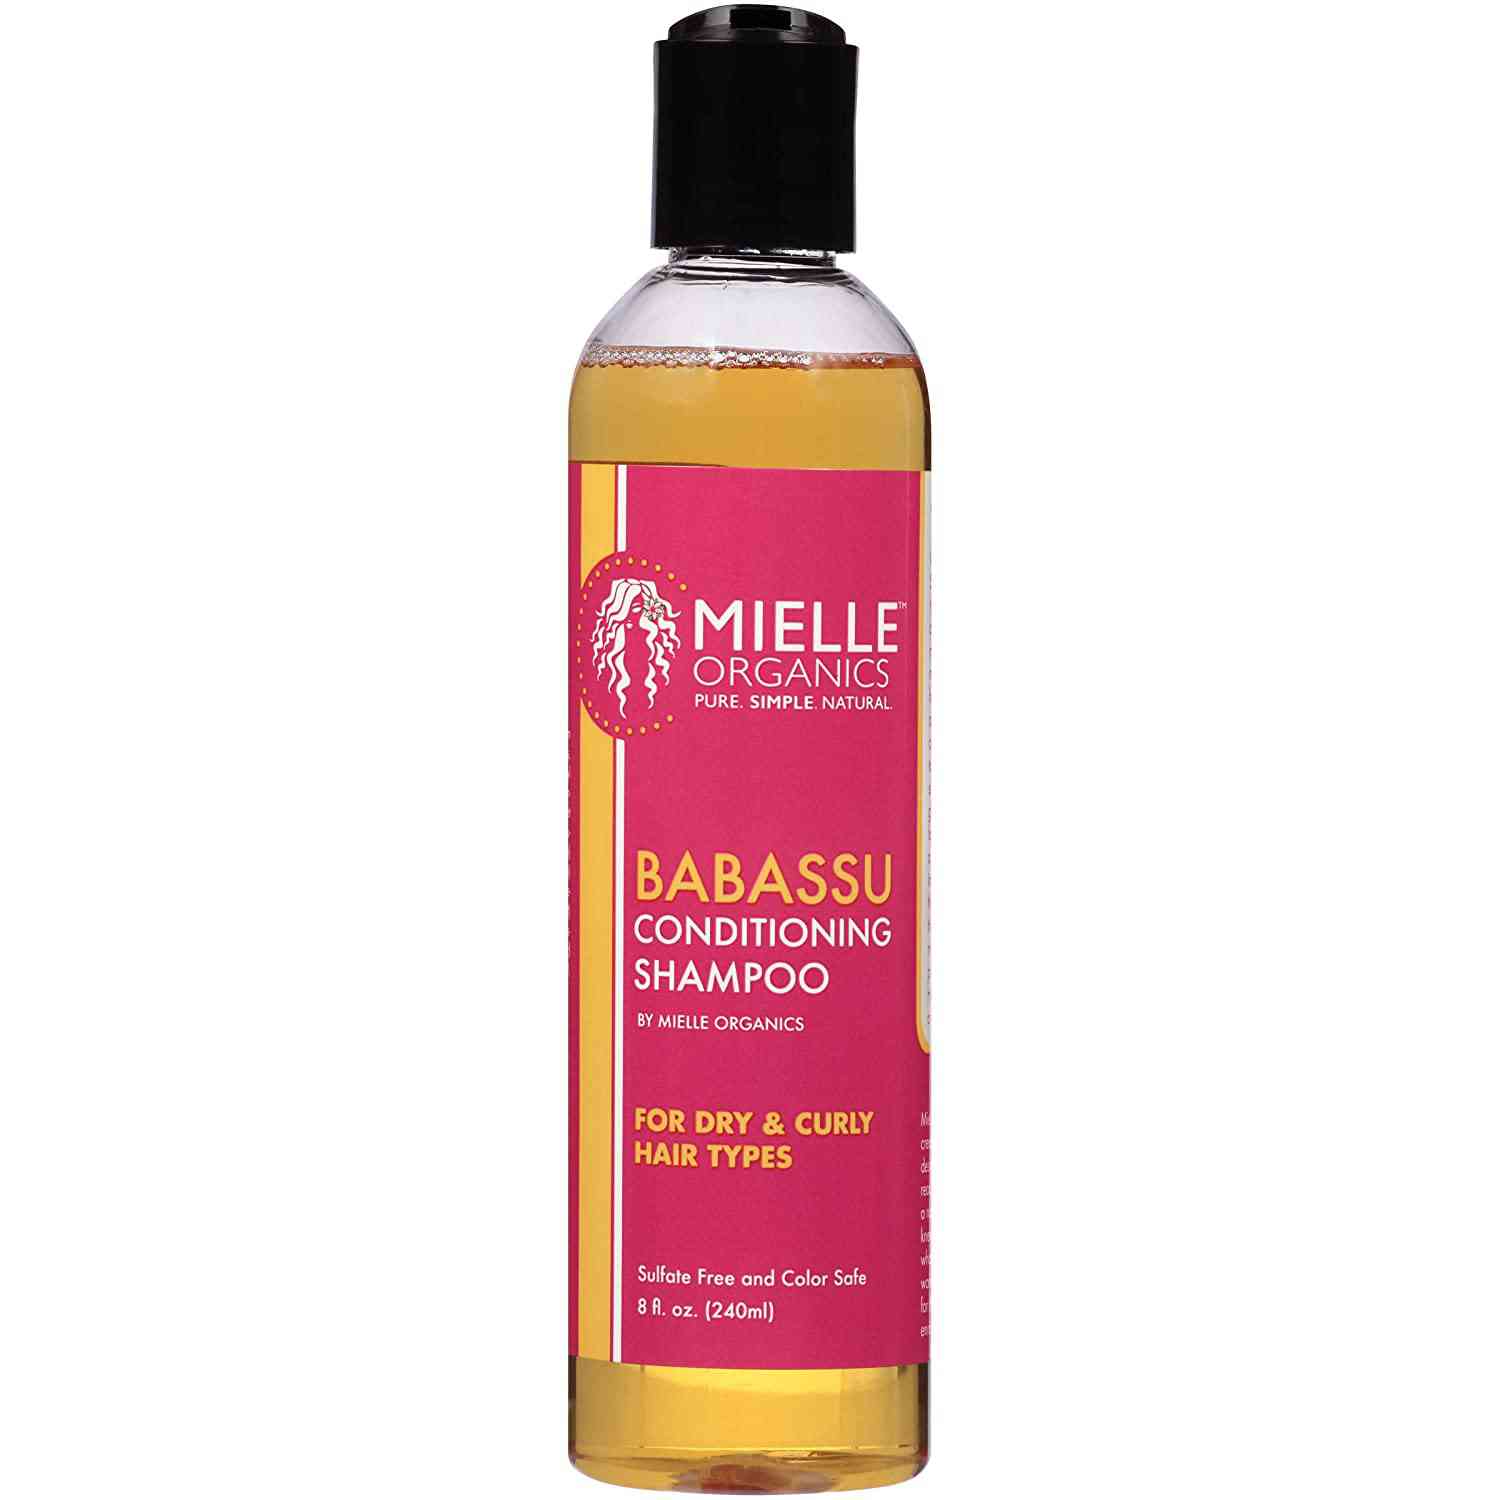 mielle organics babassu shampooing revitalisant 240 ml 1